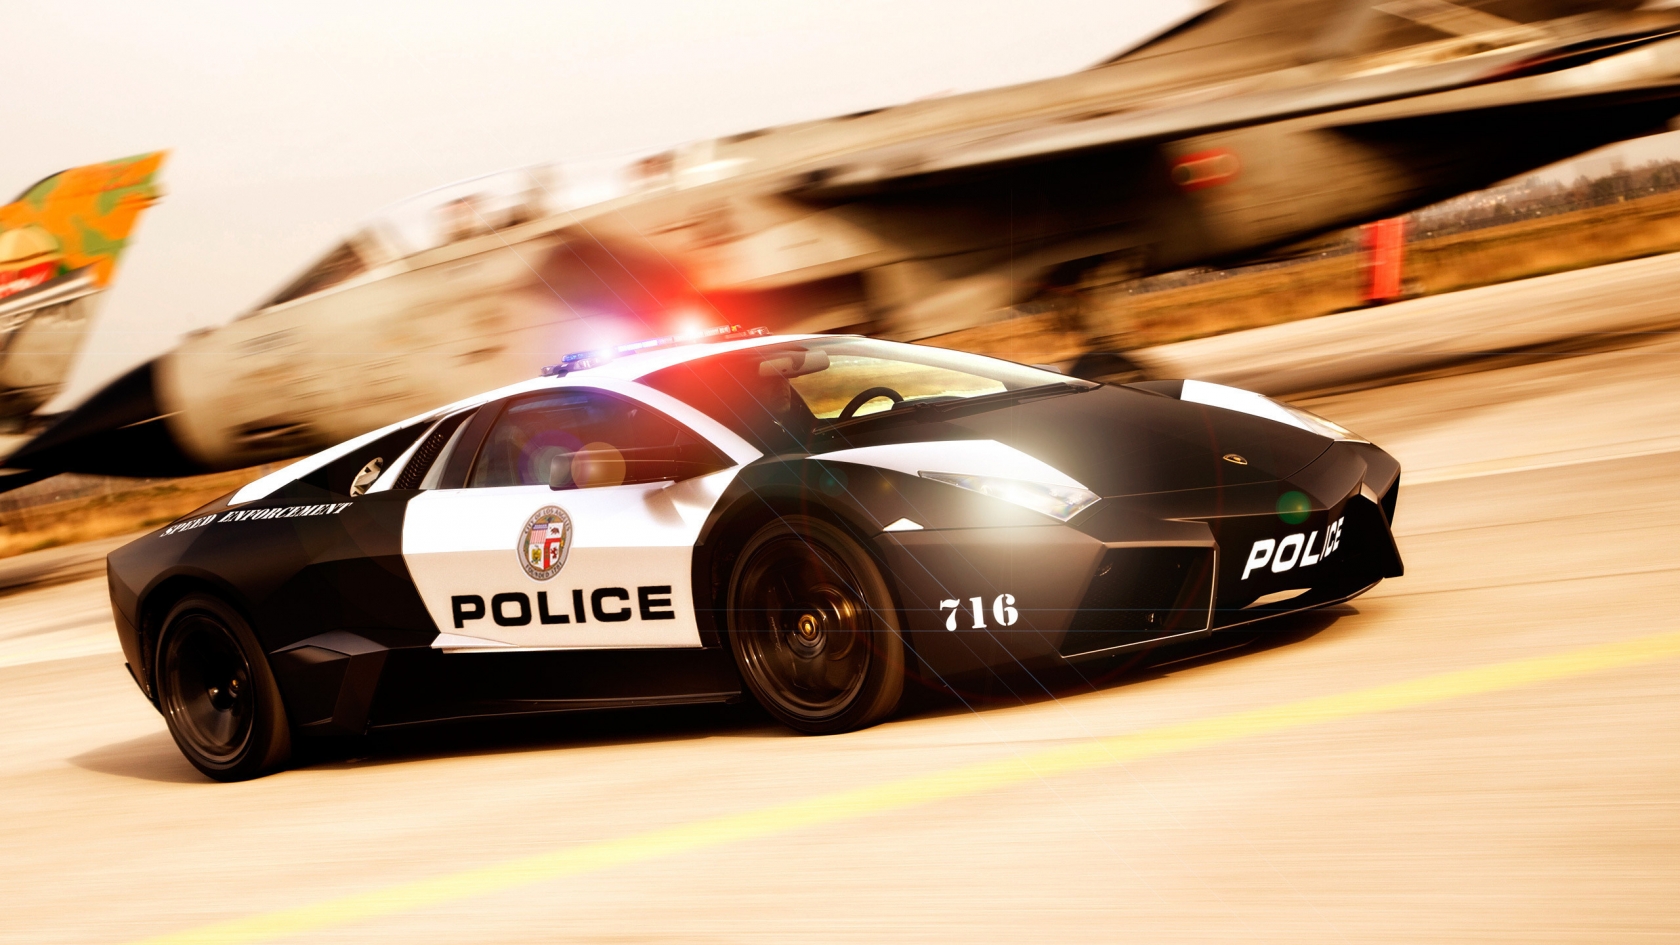 Lamborghini Police Car NFS for 1680 x 945 HDTV resolution